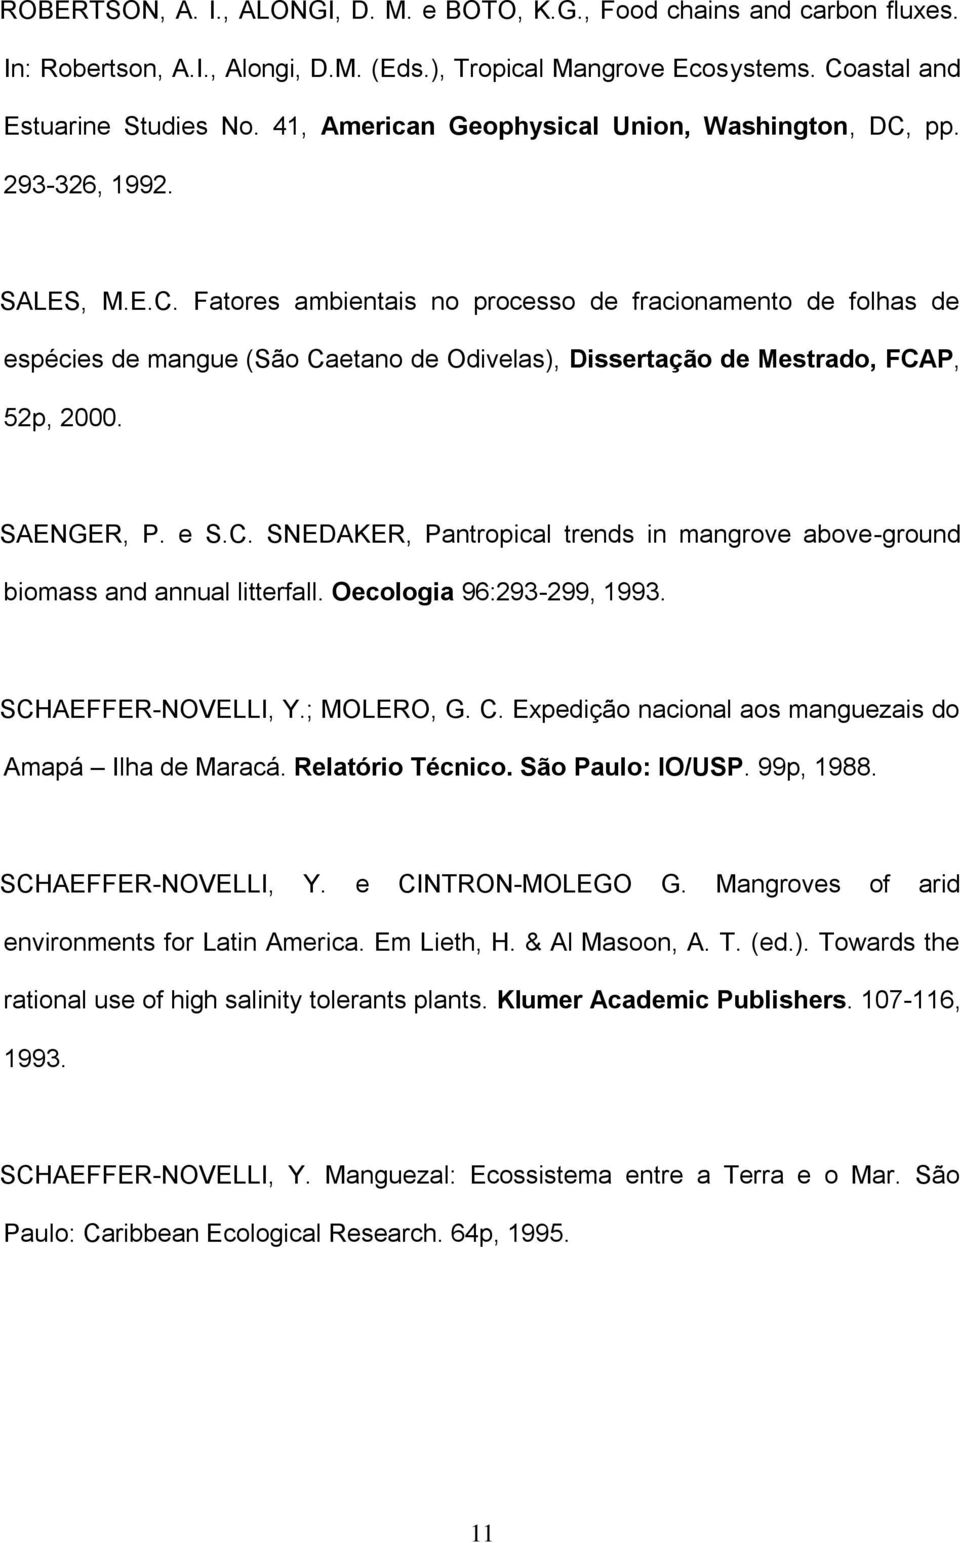 SAENGER, P. e S.C. SNEDAKER, Pantropical trends in mangrove above-ground biomass and annual litterfall. Oecologia 96:293-299, 1993. SCHAEFFER-NOVELLI, Y.; MOLERO, G. C.